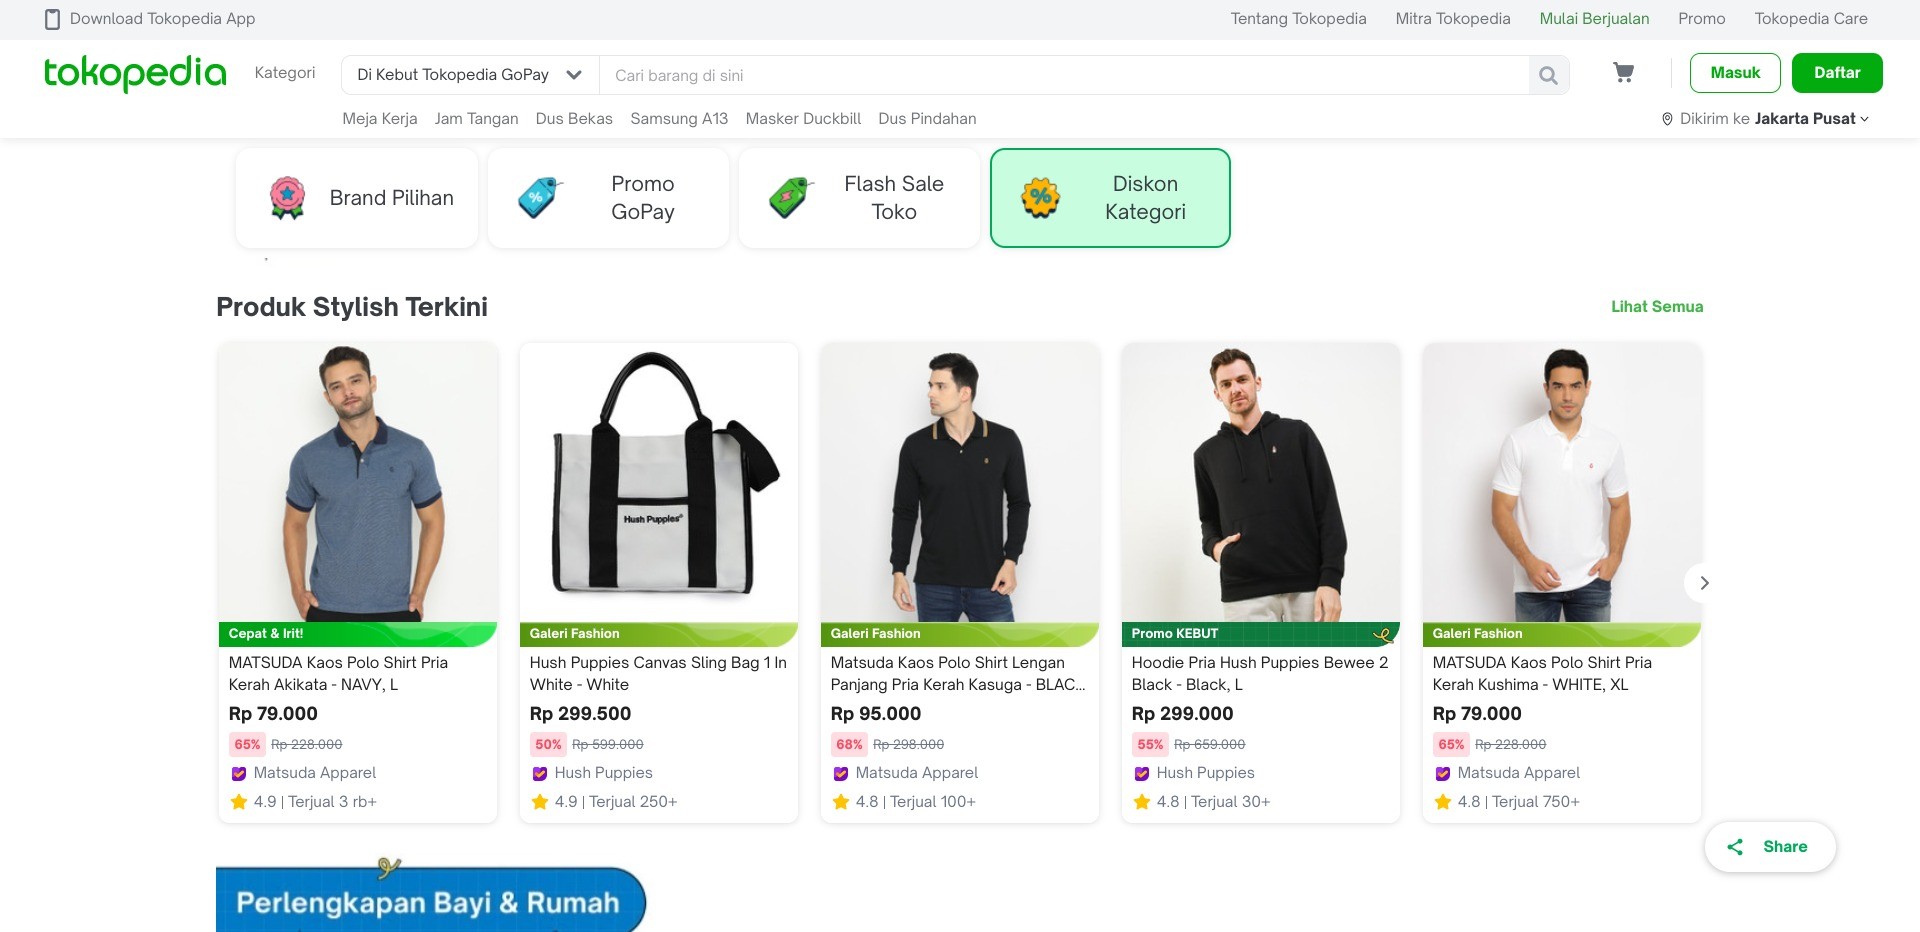 Screenshot of random listings for products on sale on tokopedia.com